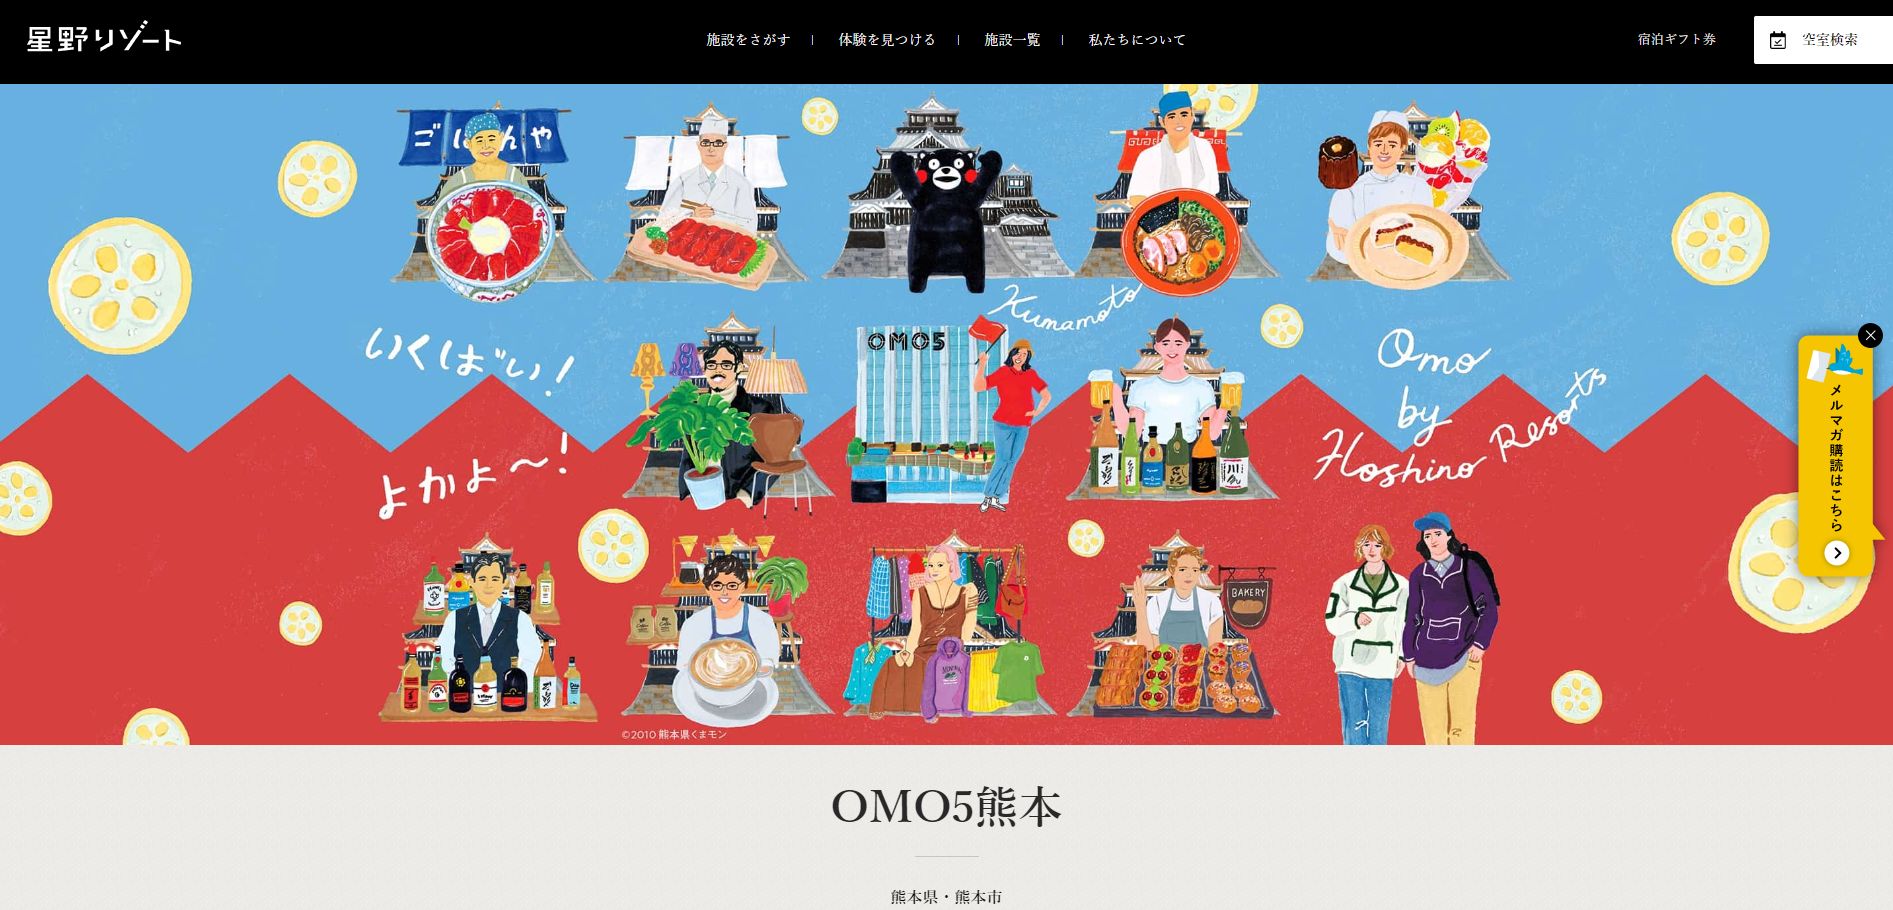 OMO5(おもふぁいぶ)熊本 by 星野リゾート